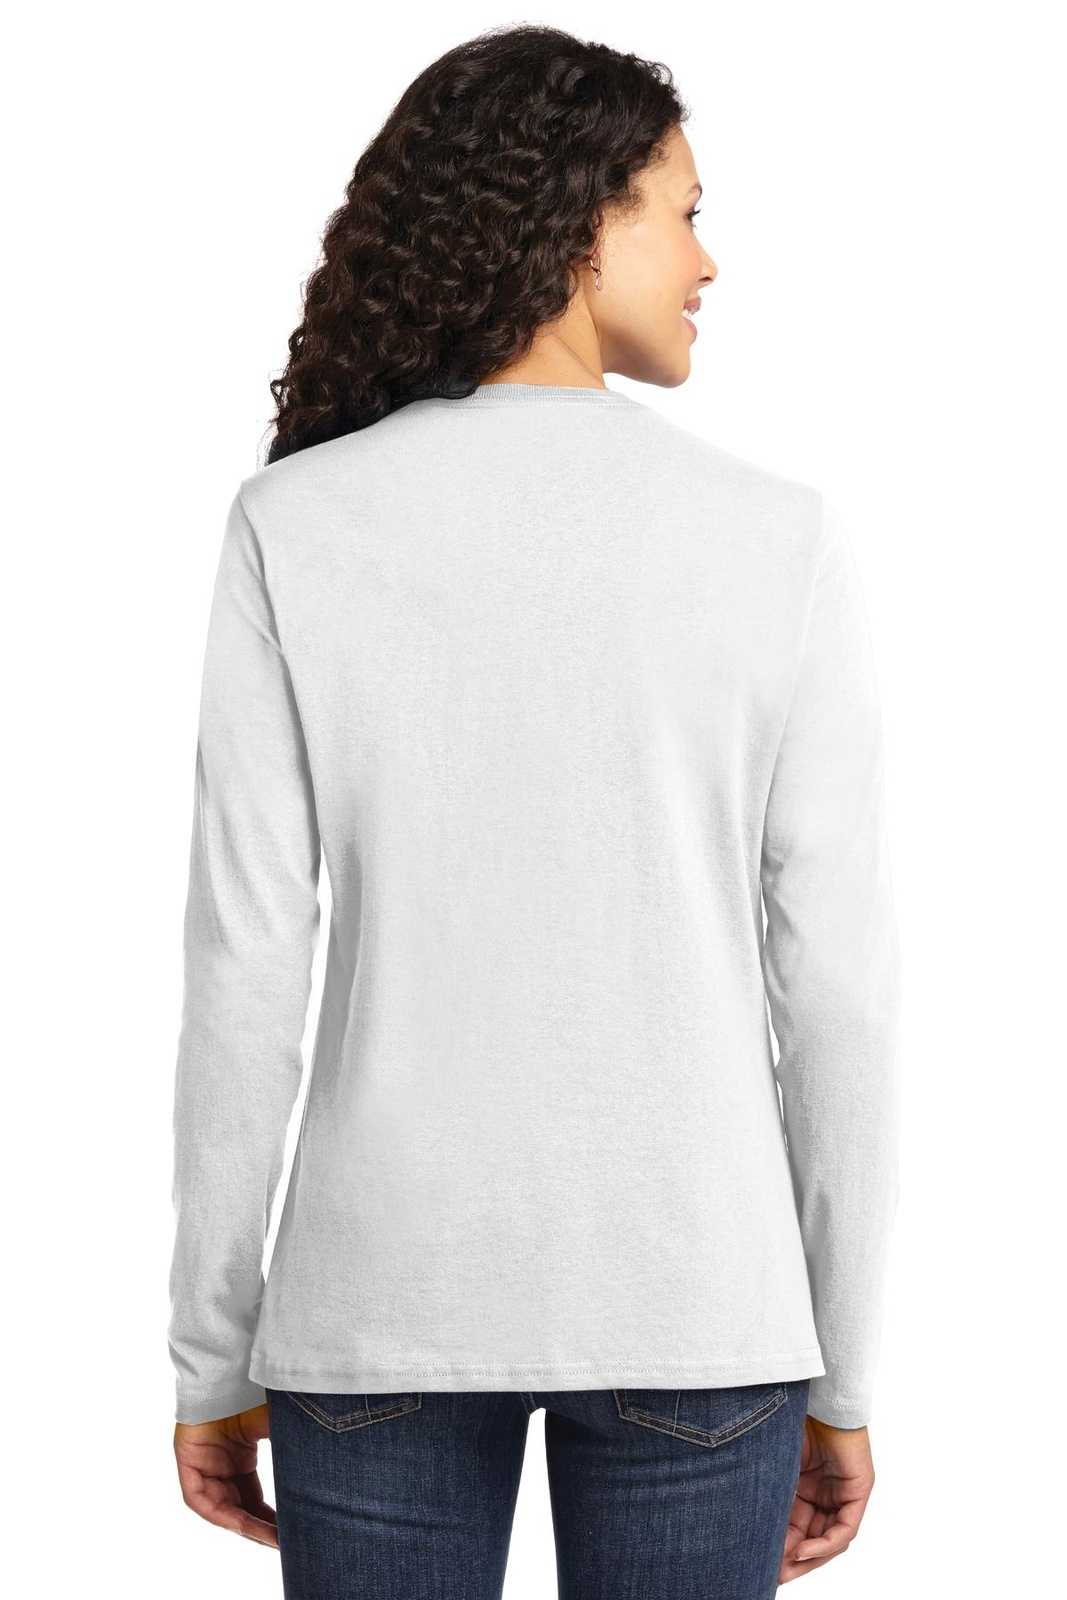 Port & Company LPC54LS Ladies Long Sleeve Core Cotton Tee - White - HIT a Double - 1